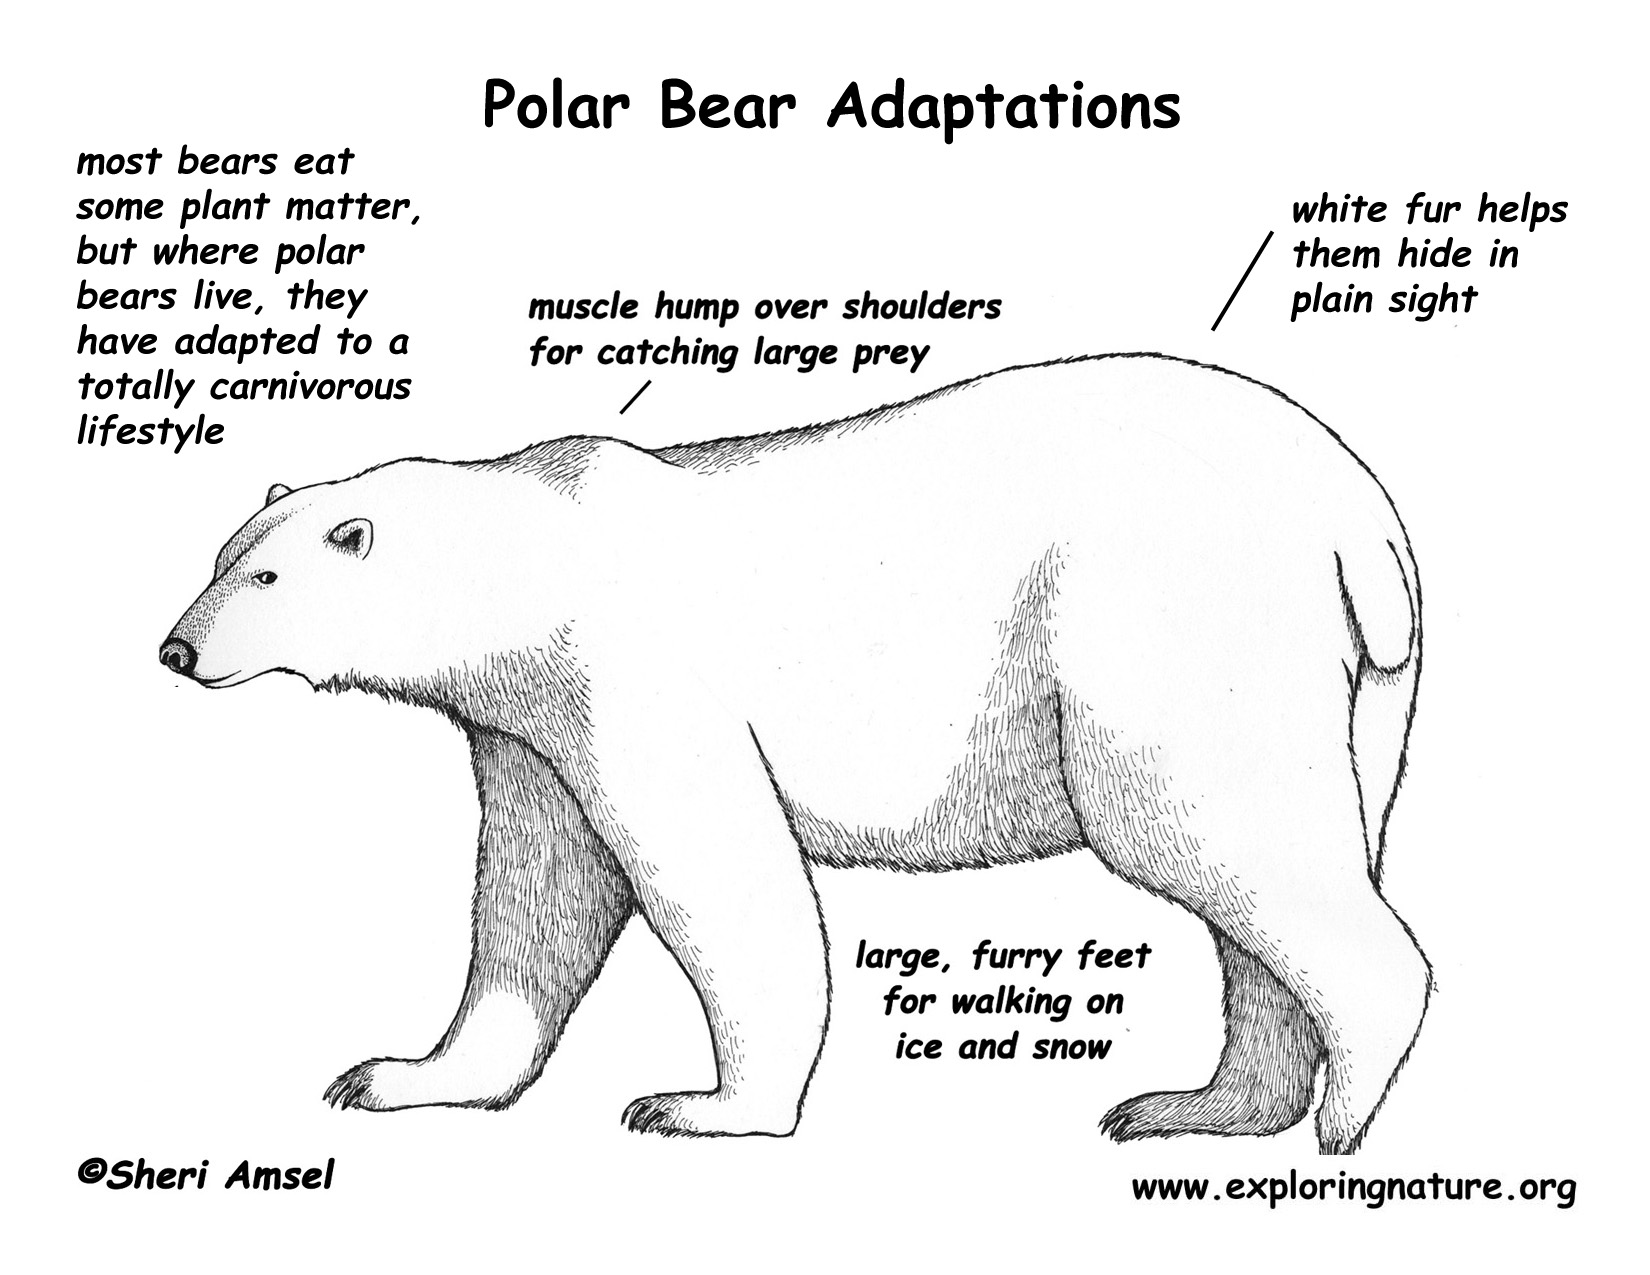 Adaptations of the Polar Bear